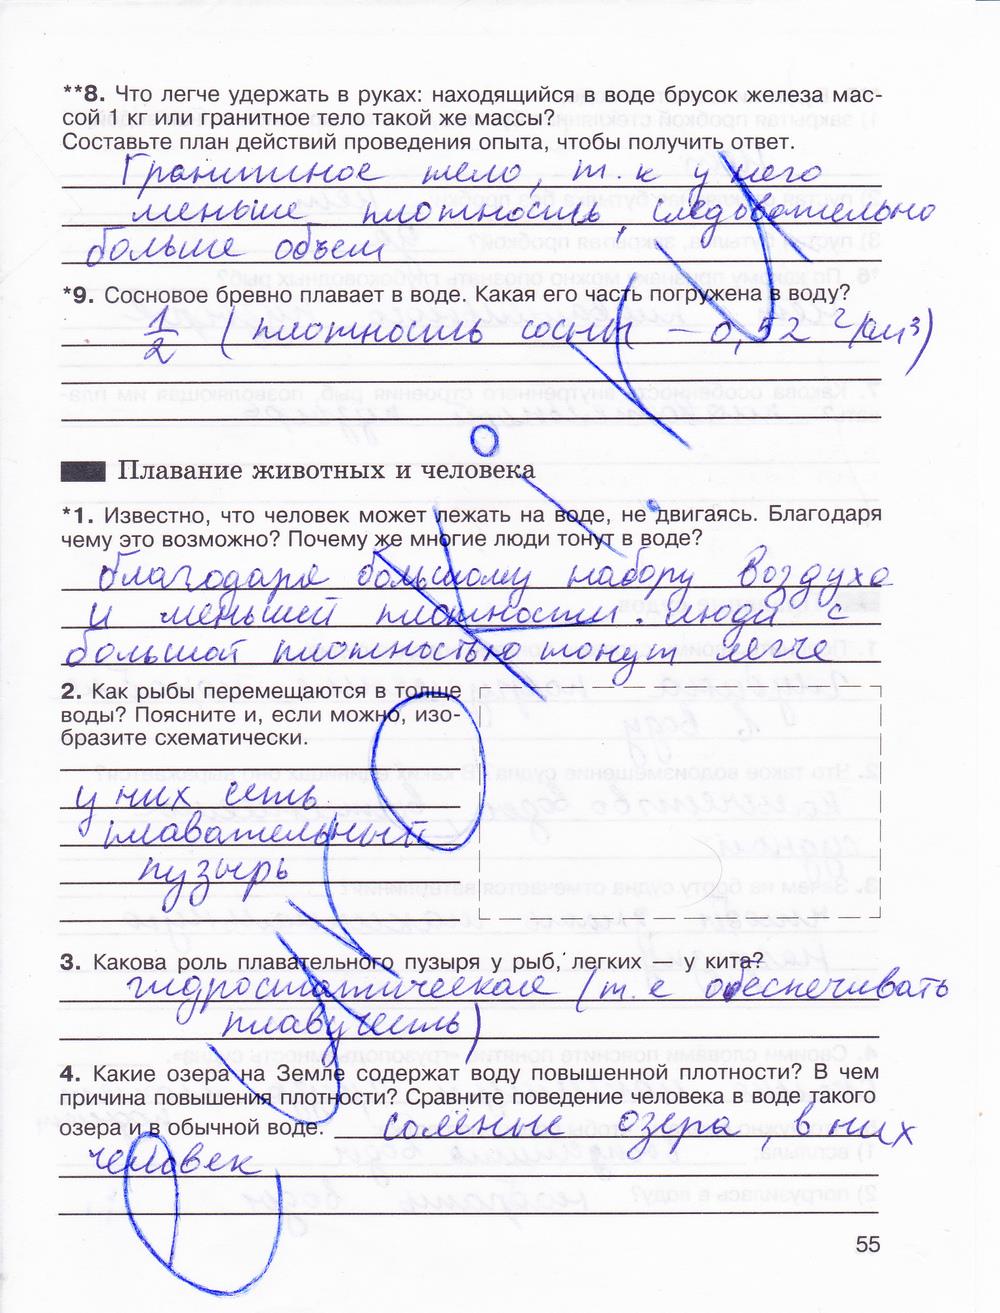 гдз 7 класс рабочая тетрадь страница 55 физика Мартынова, Бовин, Коротаев